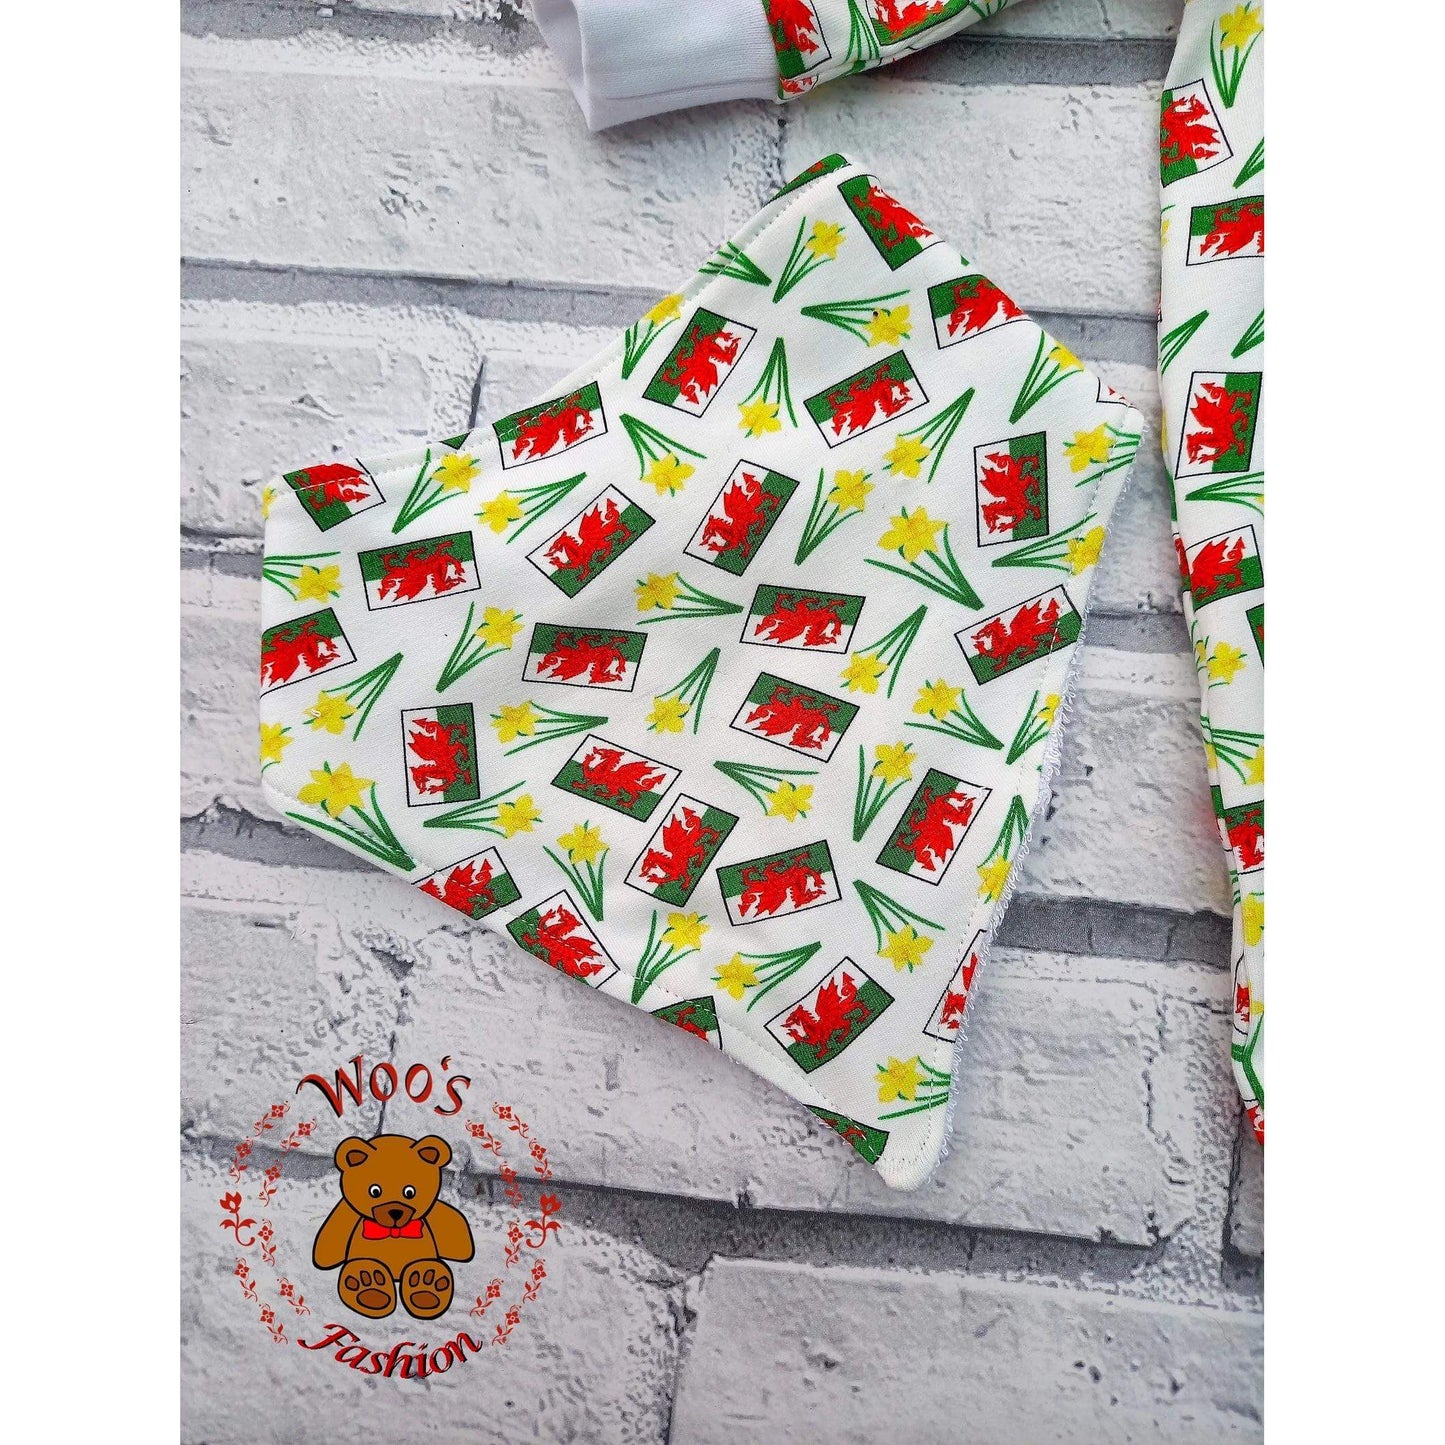 Gift Set - Babygro, Hat, Bib, Mittens and Booties - Daffodil and Dragon Flag Print